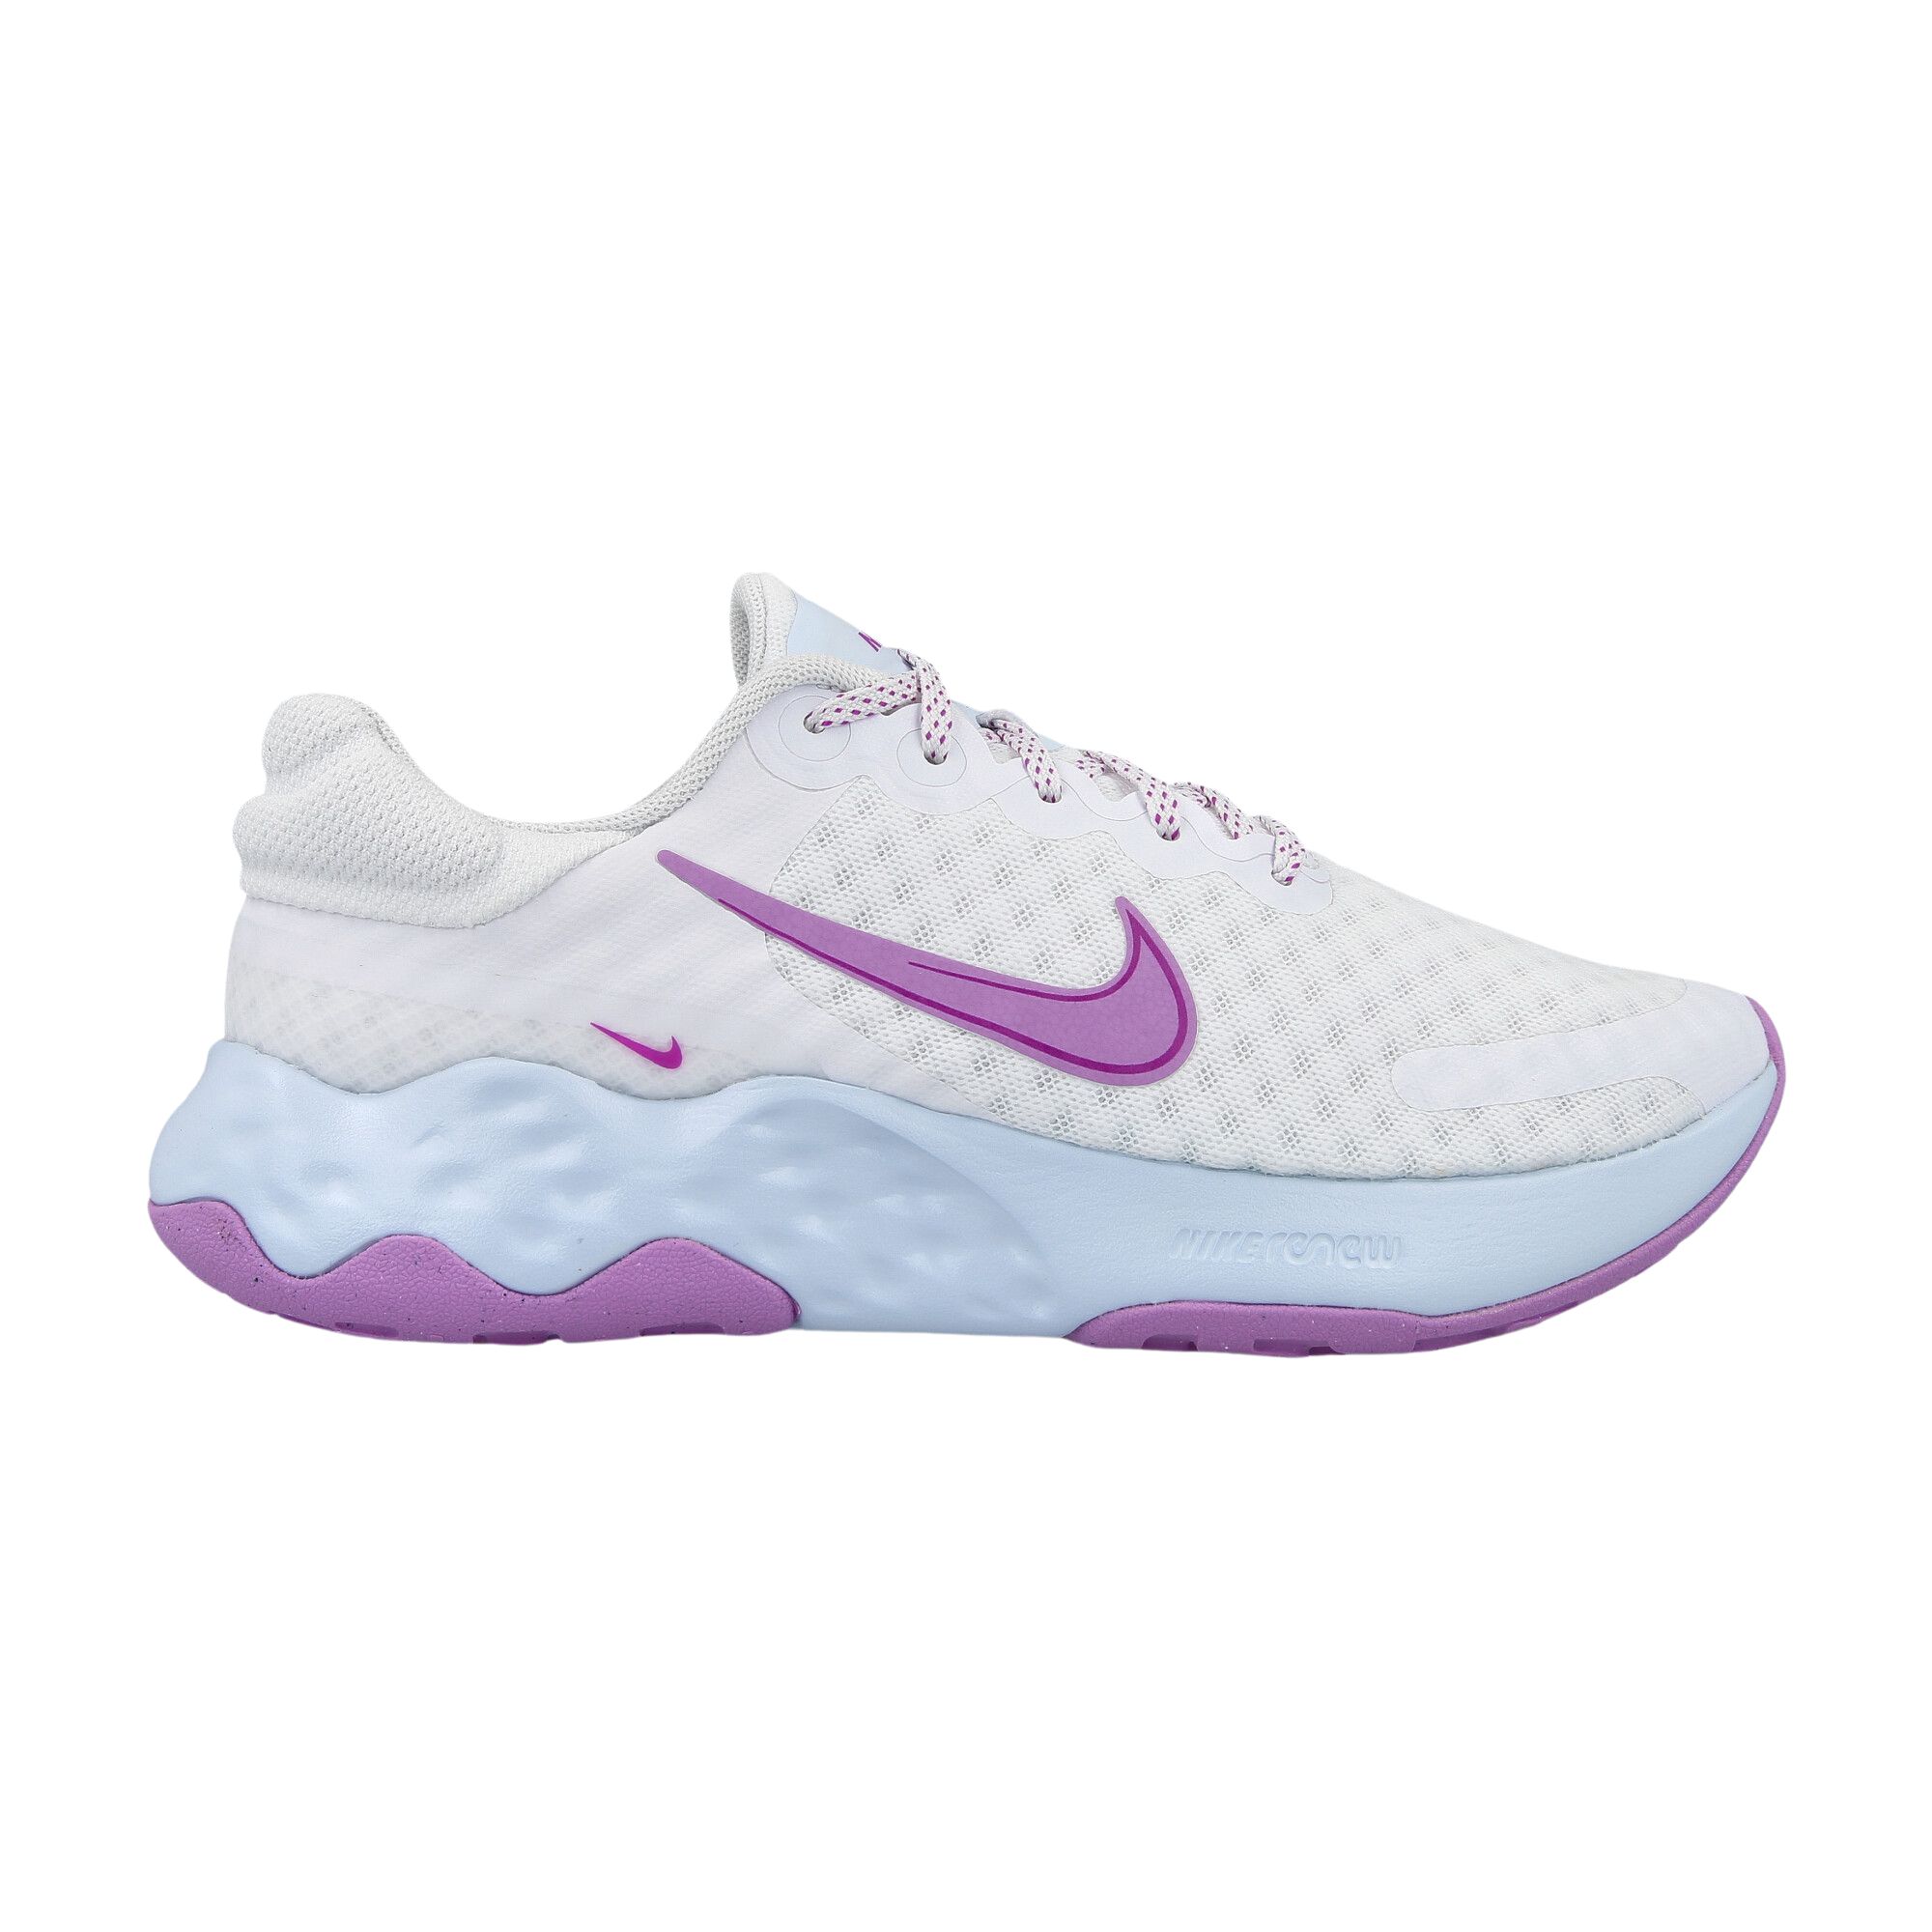 Tenis Nike Renew Ride 3 Branco+lilas - Cross Sports